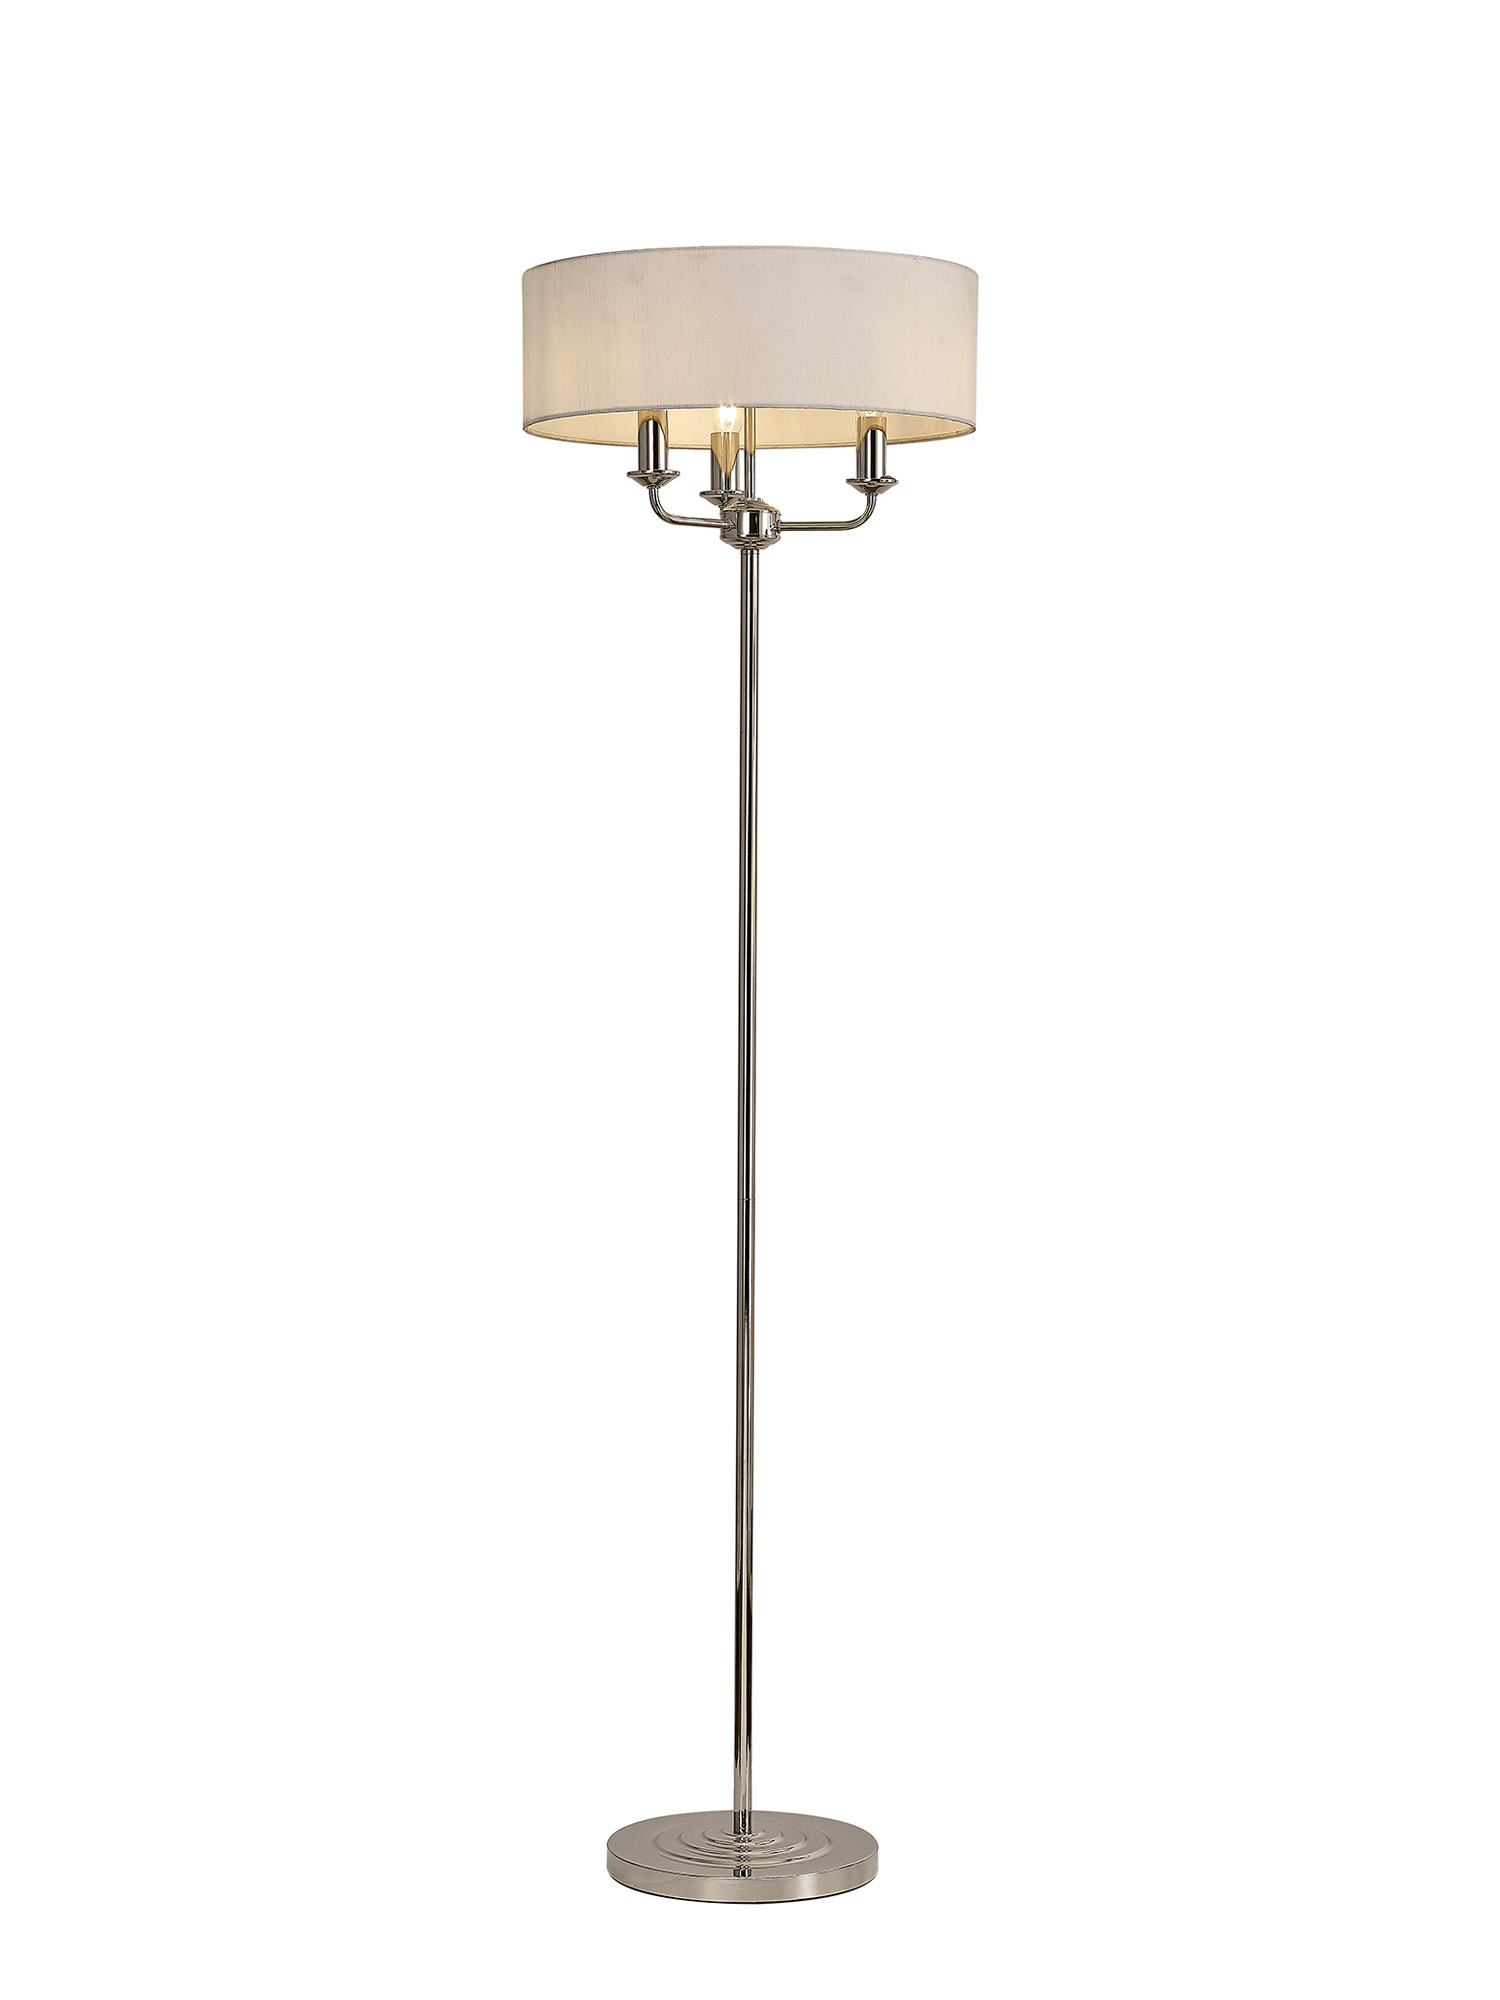 DK0881  Banyan 45cm 3 Light Floor Lamp Polished Nickel, White